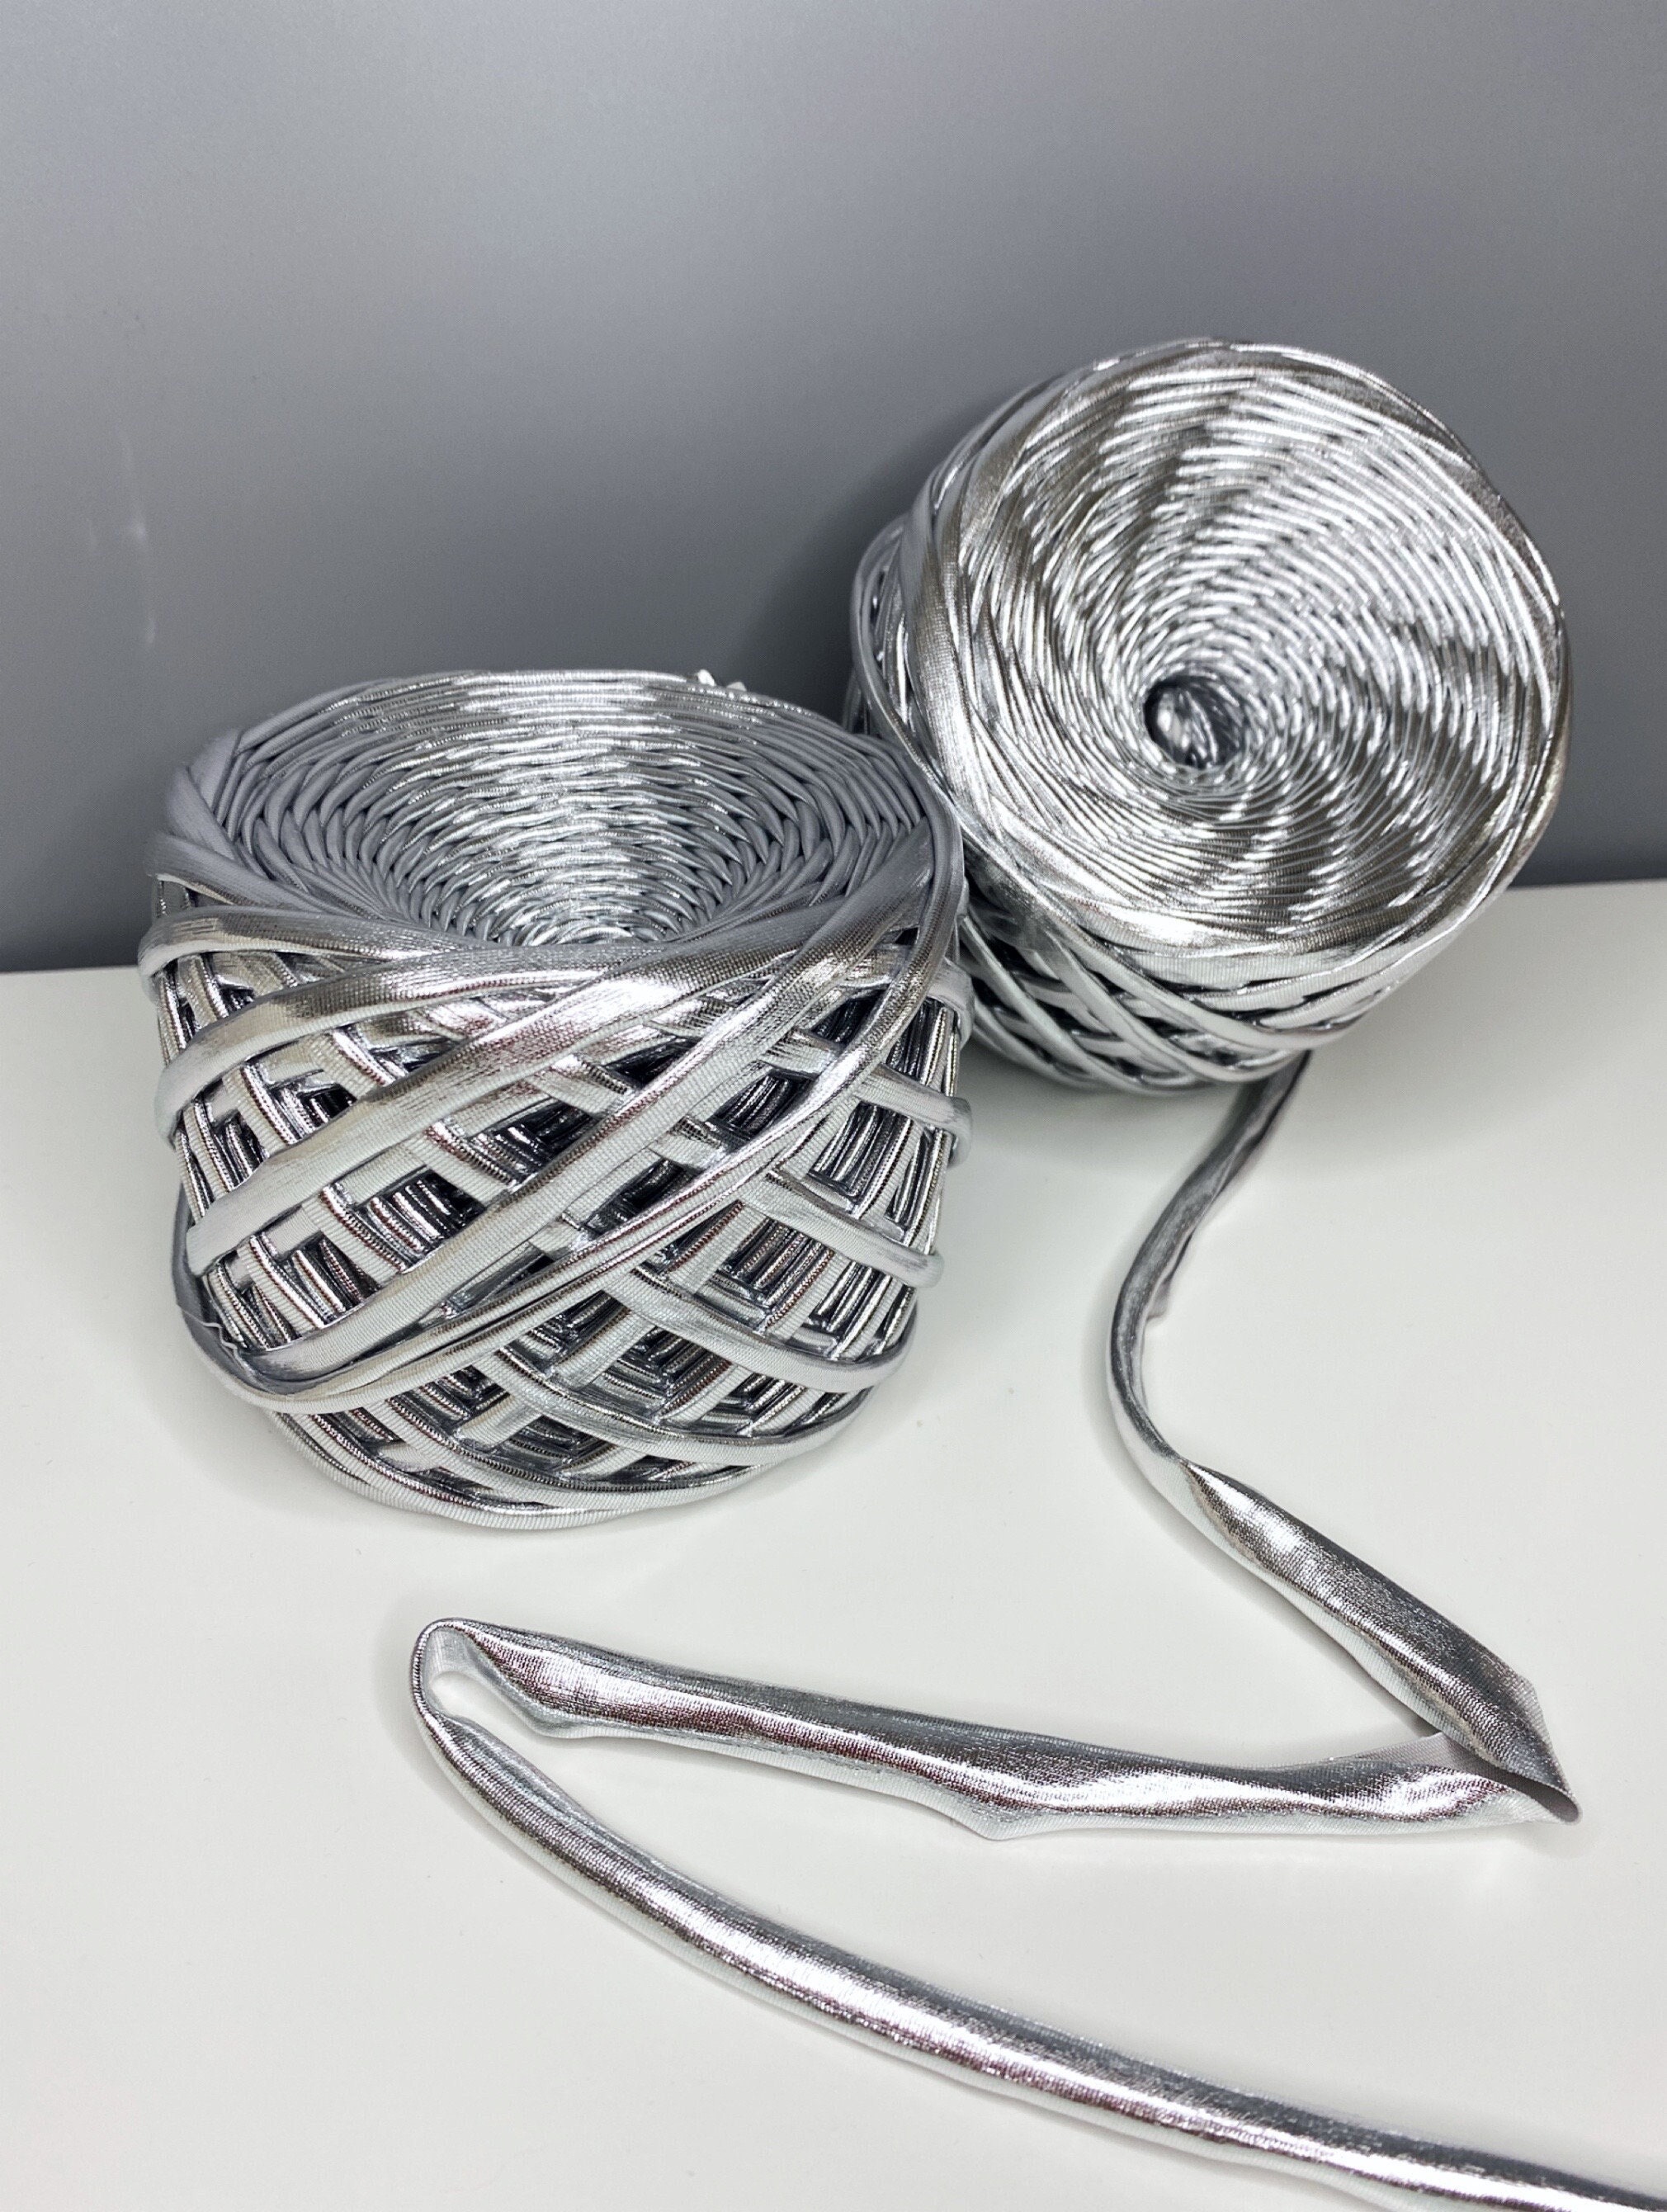 Gray Sock yarn. Sport weight wool for knitting. SCHOPPEL Admiral Stärke 6  9505 Steel gray. Medium grey solid. 6 ply worsted DK